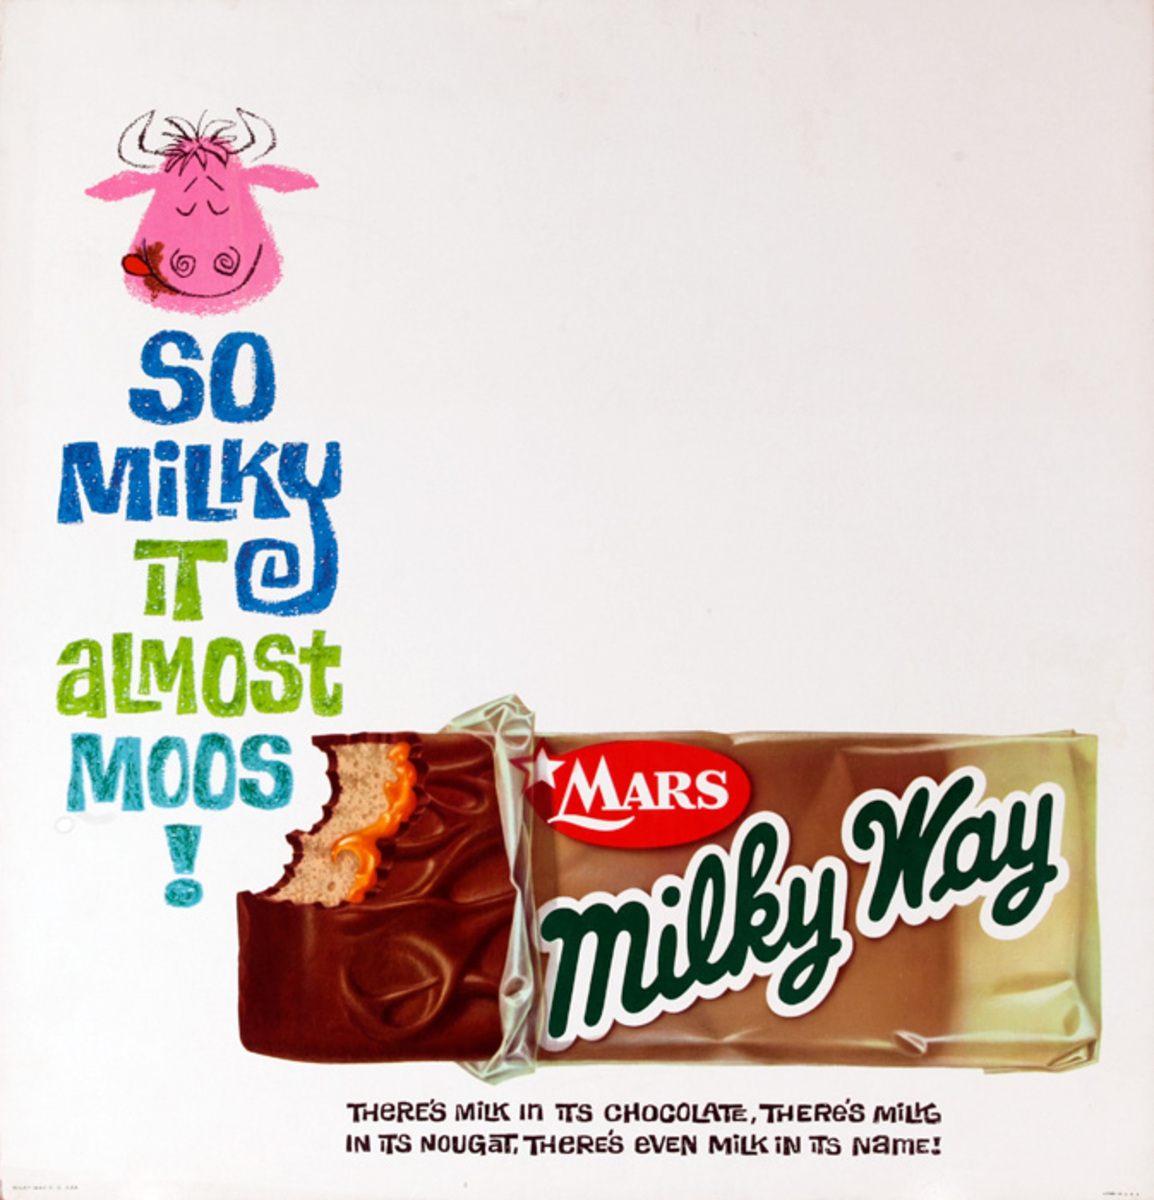 Mars Candy Original Advertising Poster, So Milky It Almost Moos!